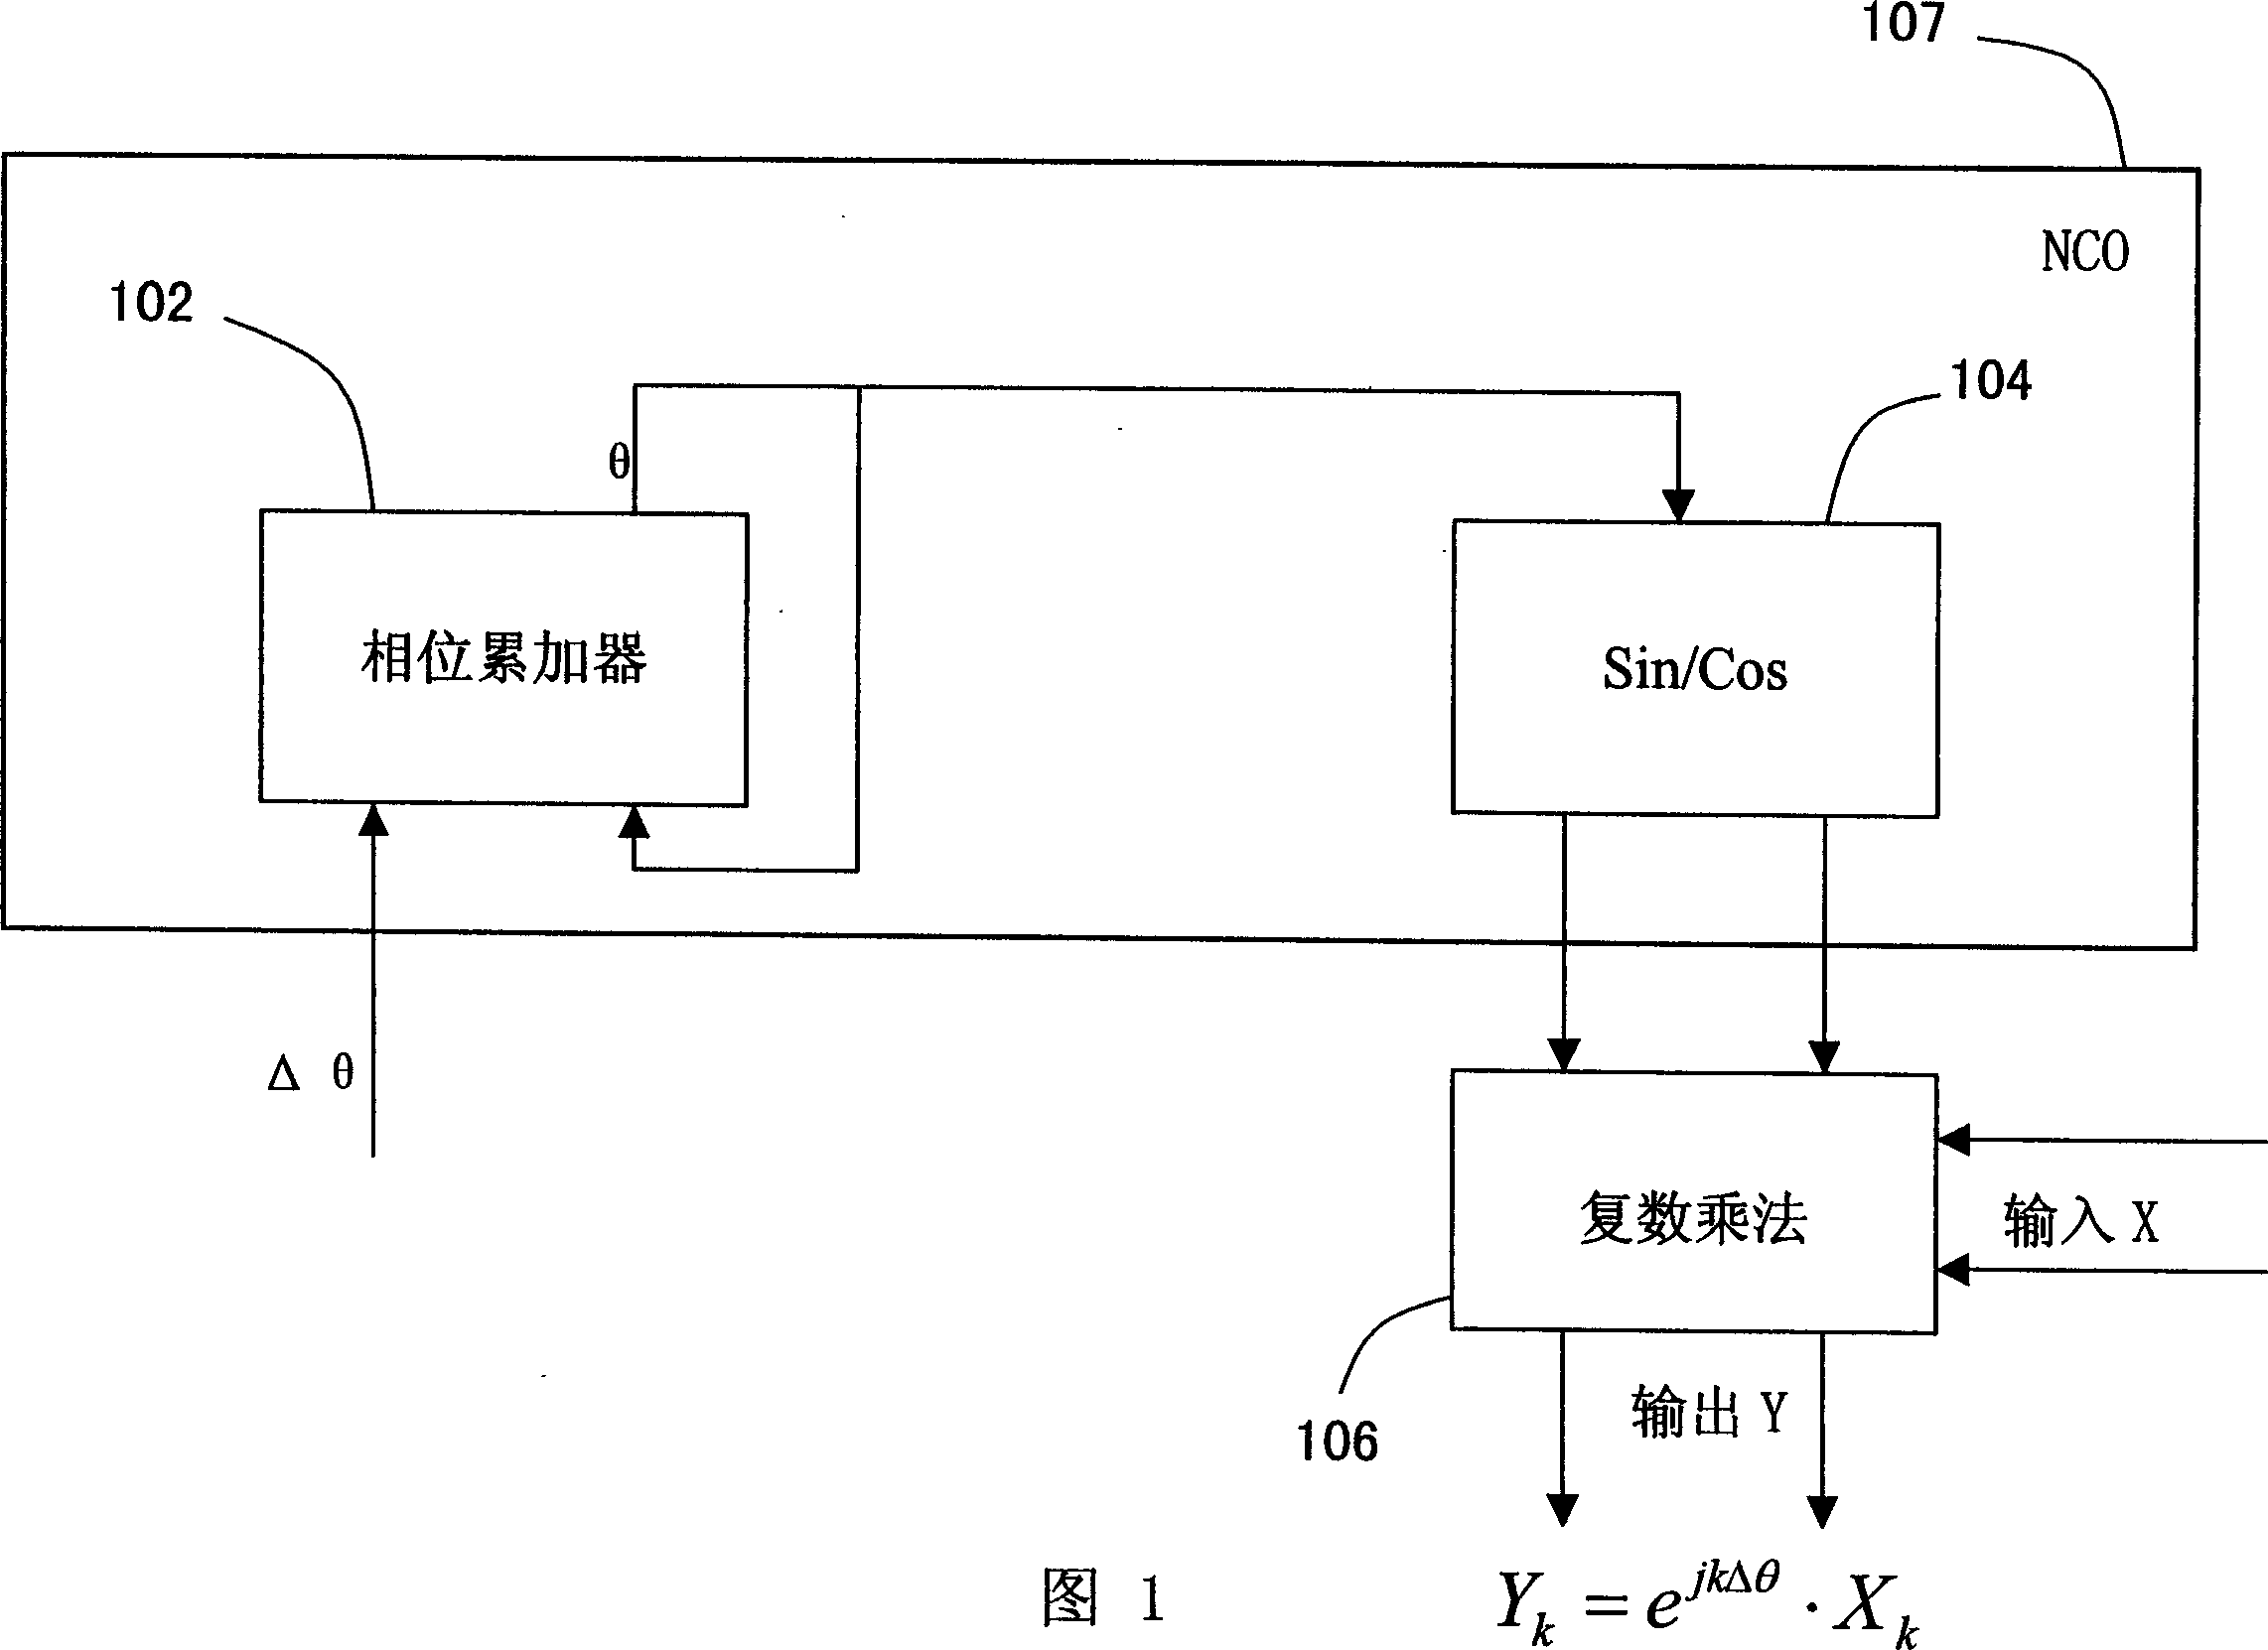 Frequency translator using a cordic phase rotator